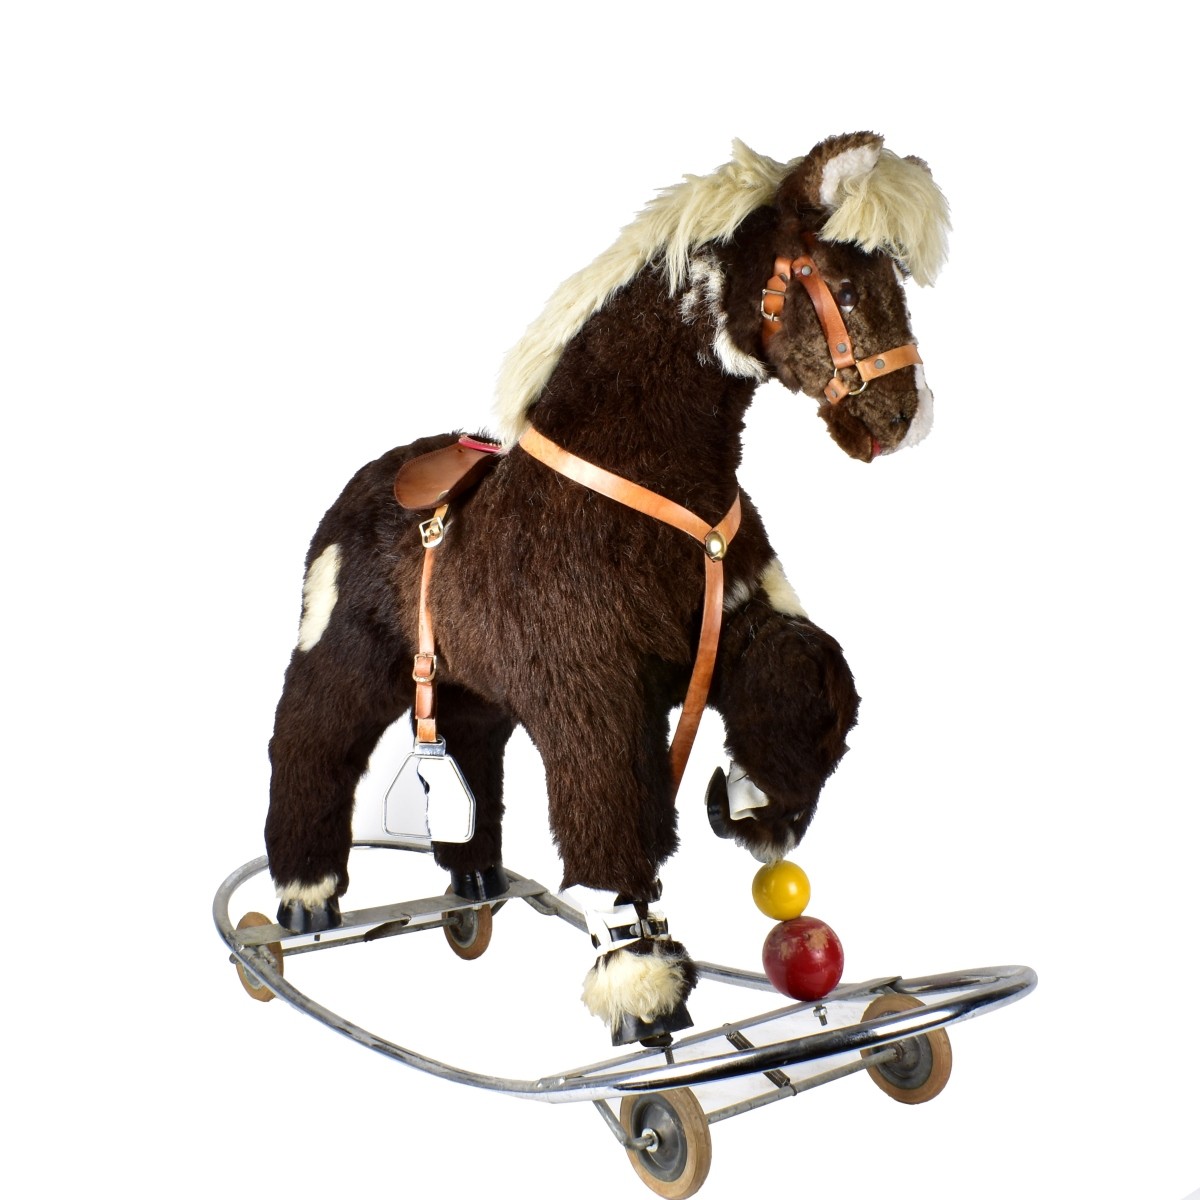 Vintage Plush Toy Riding Pony Horse on Wheels